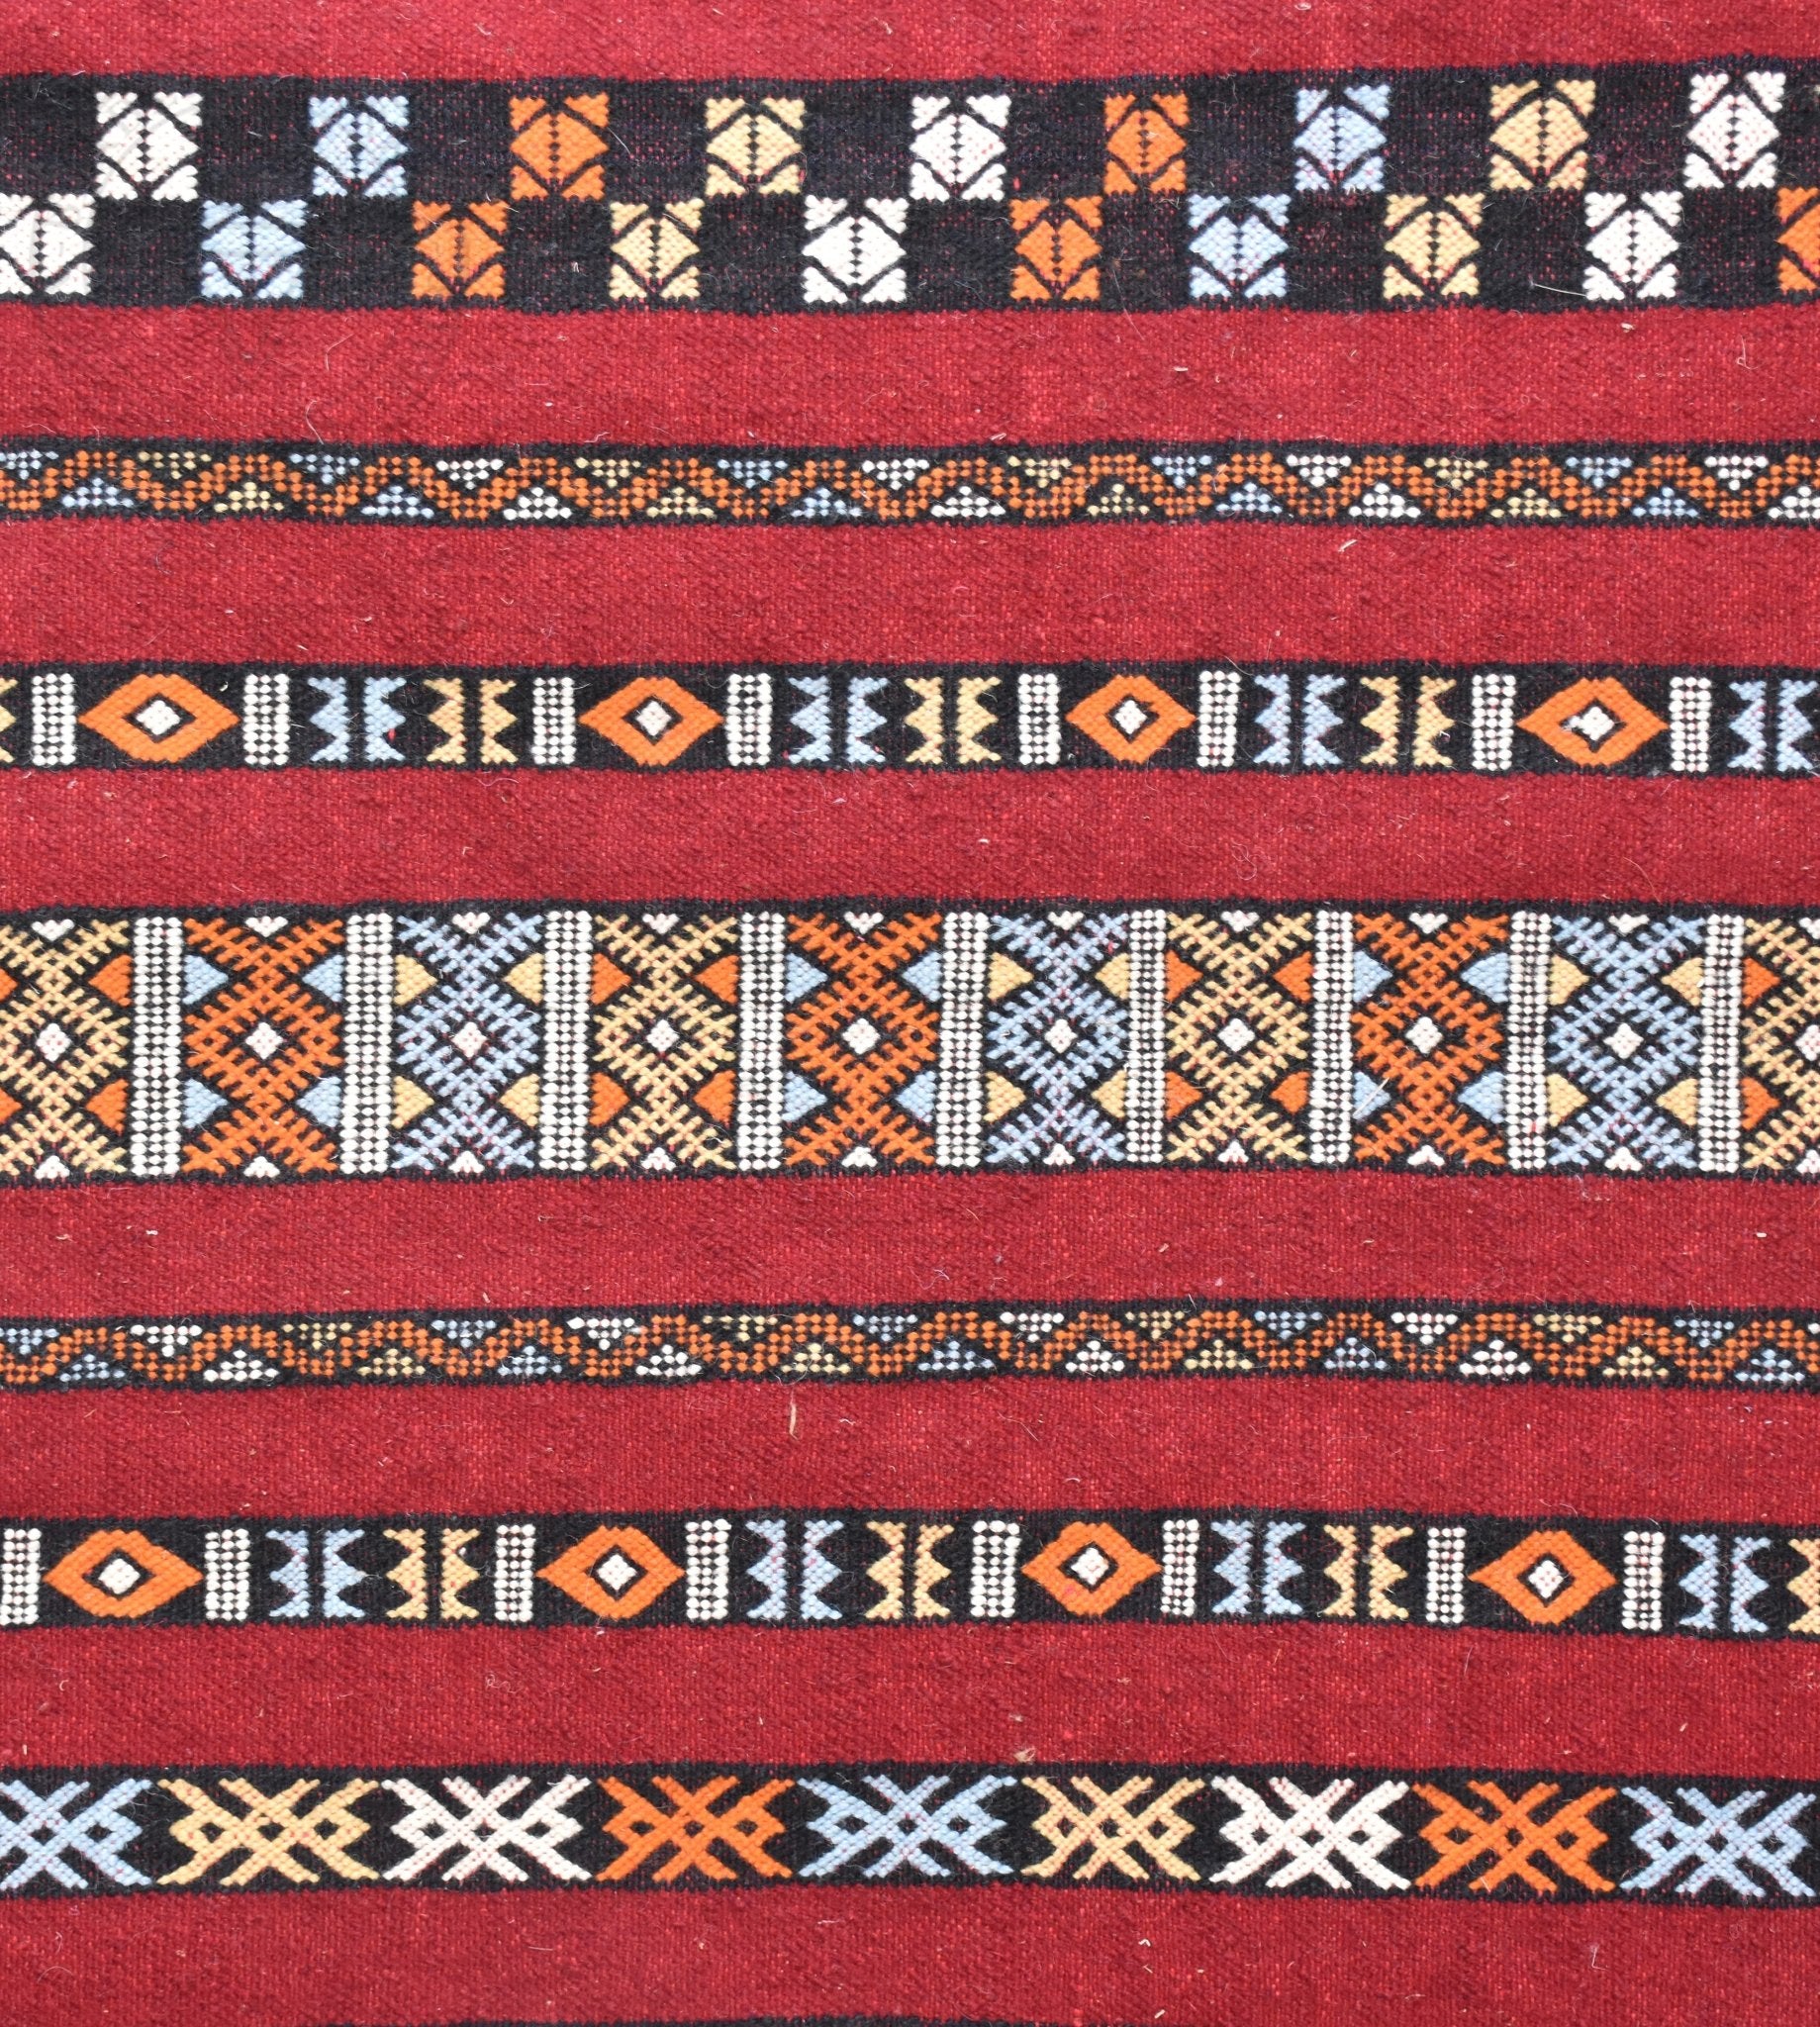 Flatweave kilim hanbal Moroccan rug - 6.57 x 9.85 ft / 200 x 300 cm - Berbers Market